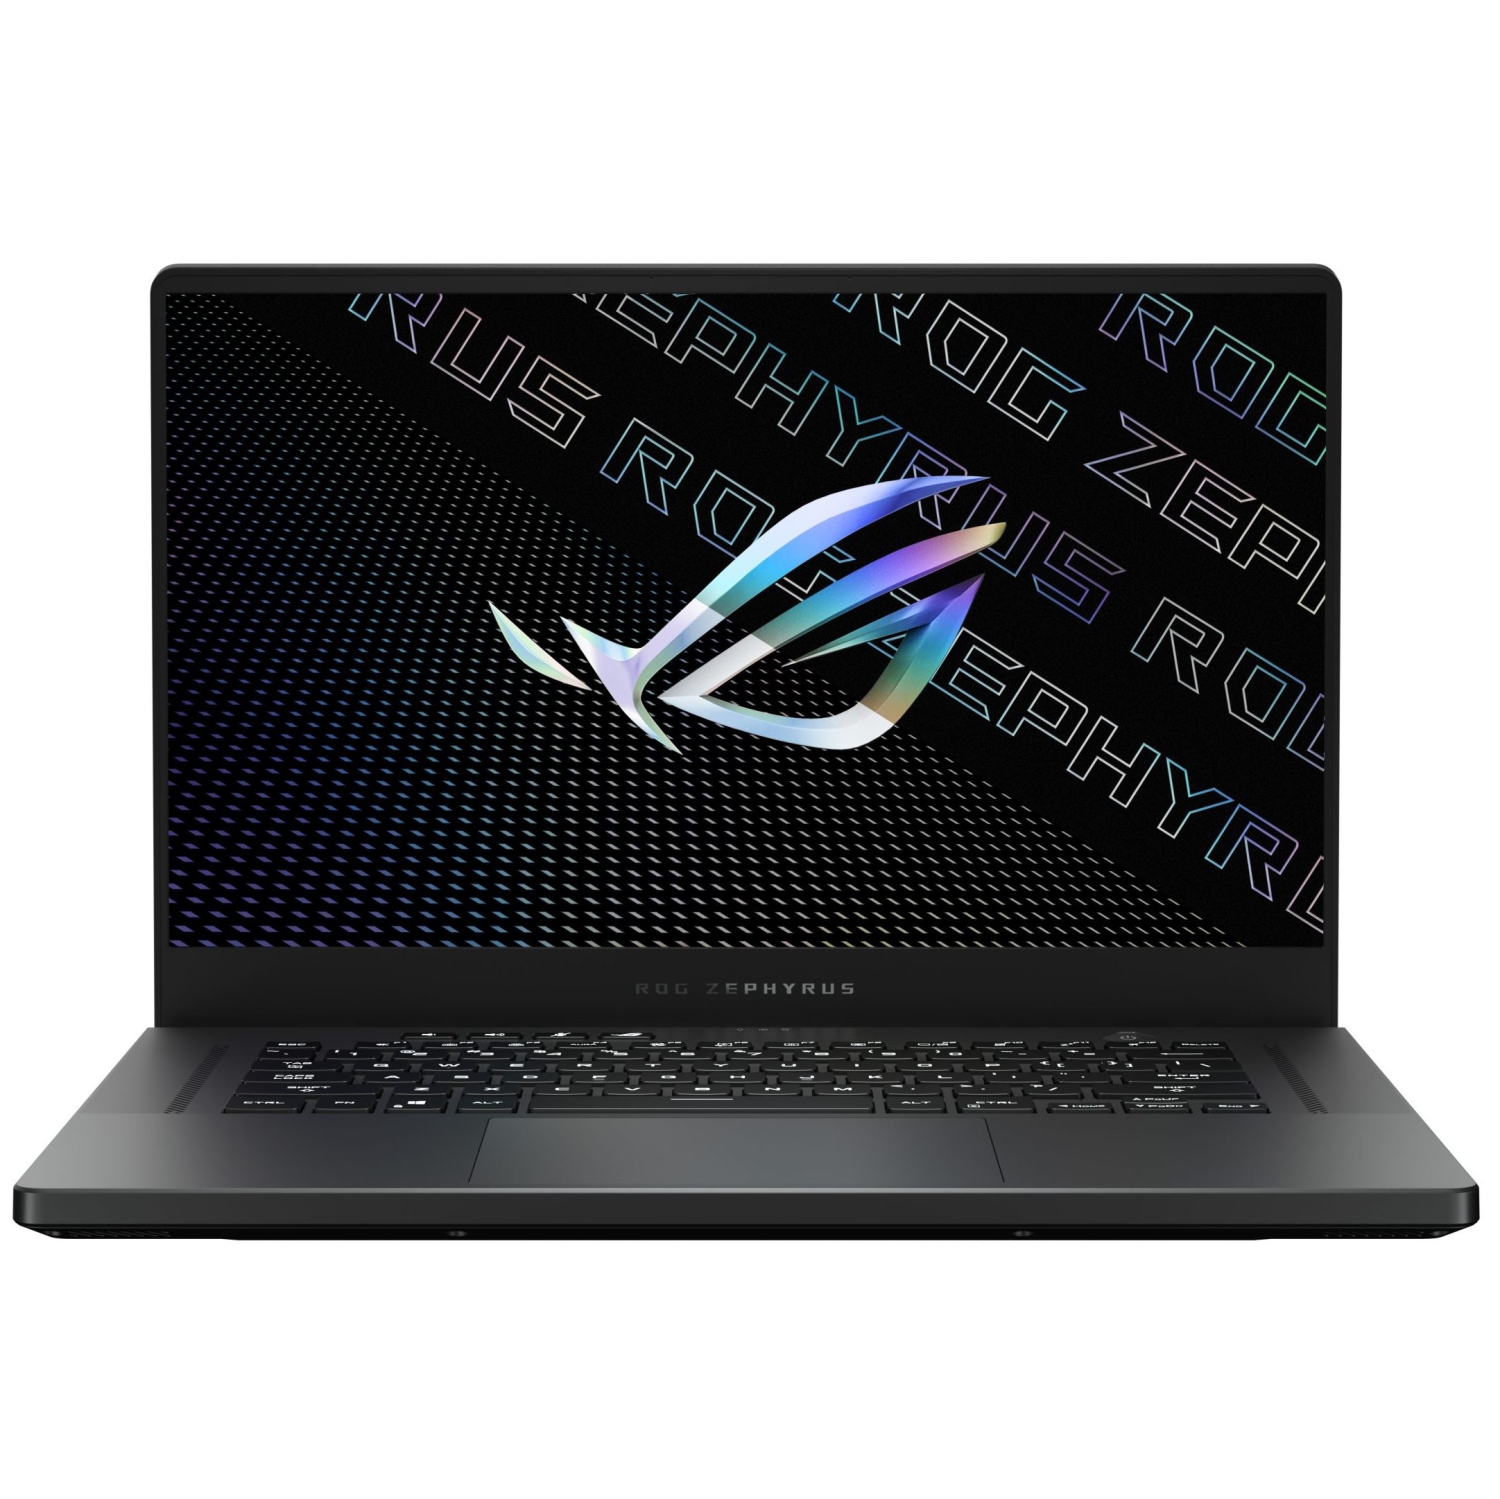 Custom ASUS ROG Zephyrus G15 Laptop (AMD Ryzen 9 5900HS, 16GB RAM, 2TB PCIe SSD, NVIDIA RTX 3070, Win 10 Home)